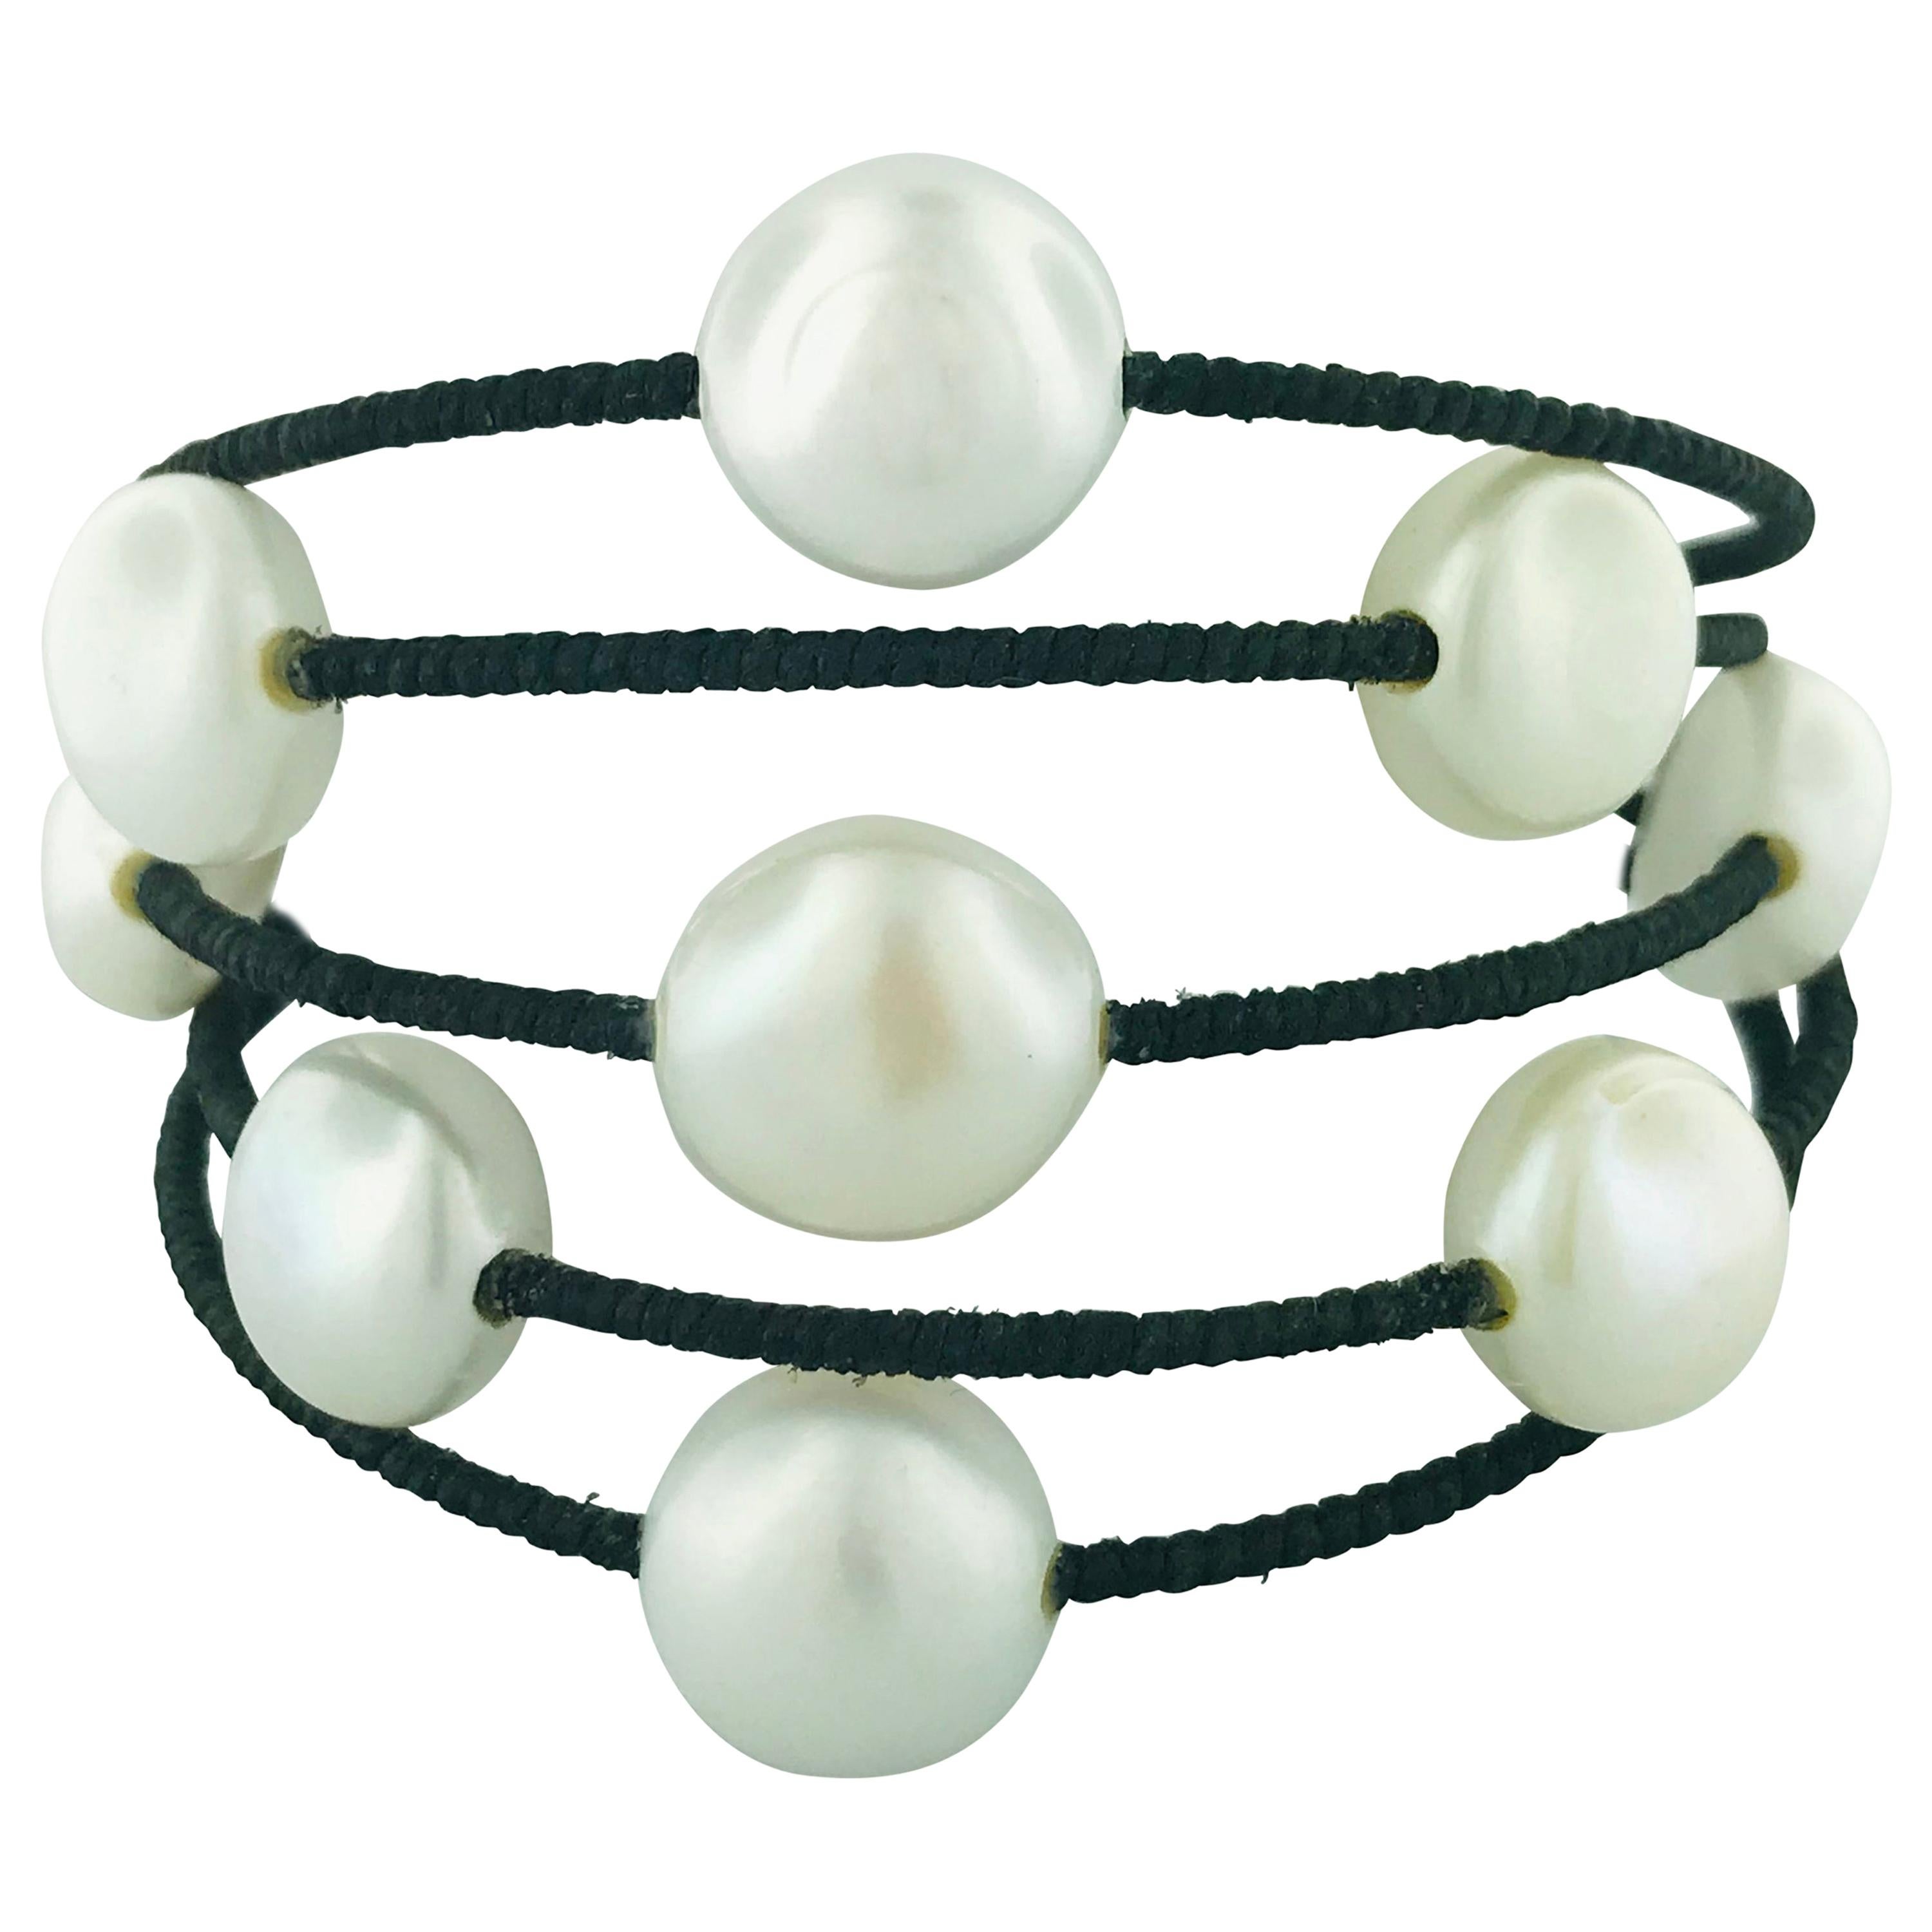 Pearl Cuff Bracelet, Flexible Edgy Genuine Cultured Pearl Bracelet, Black White